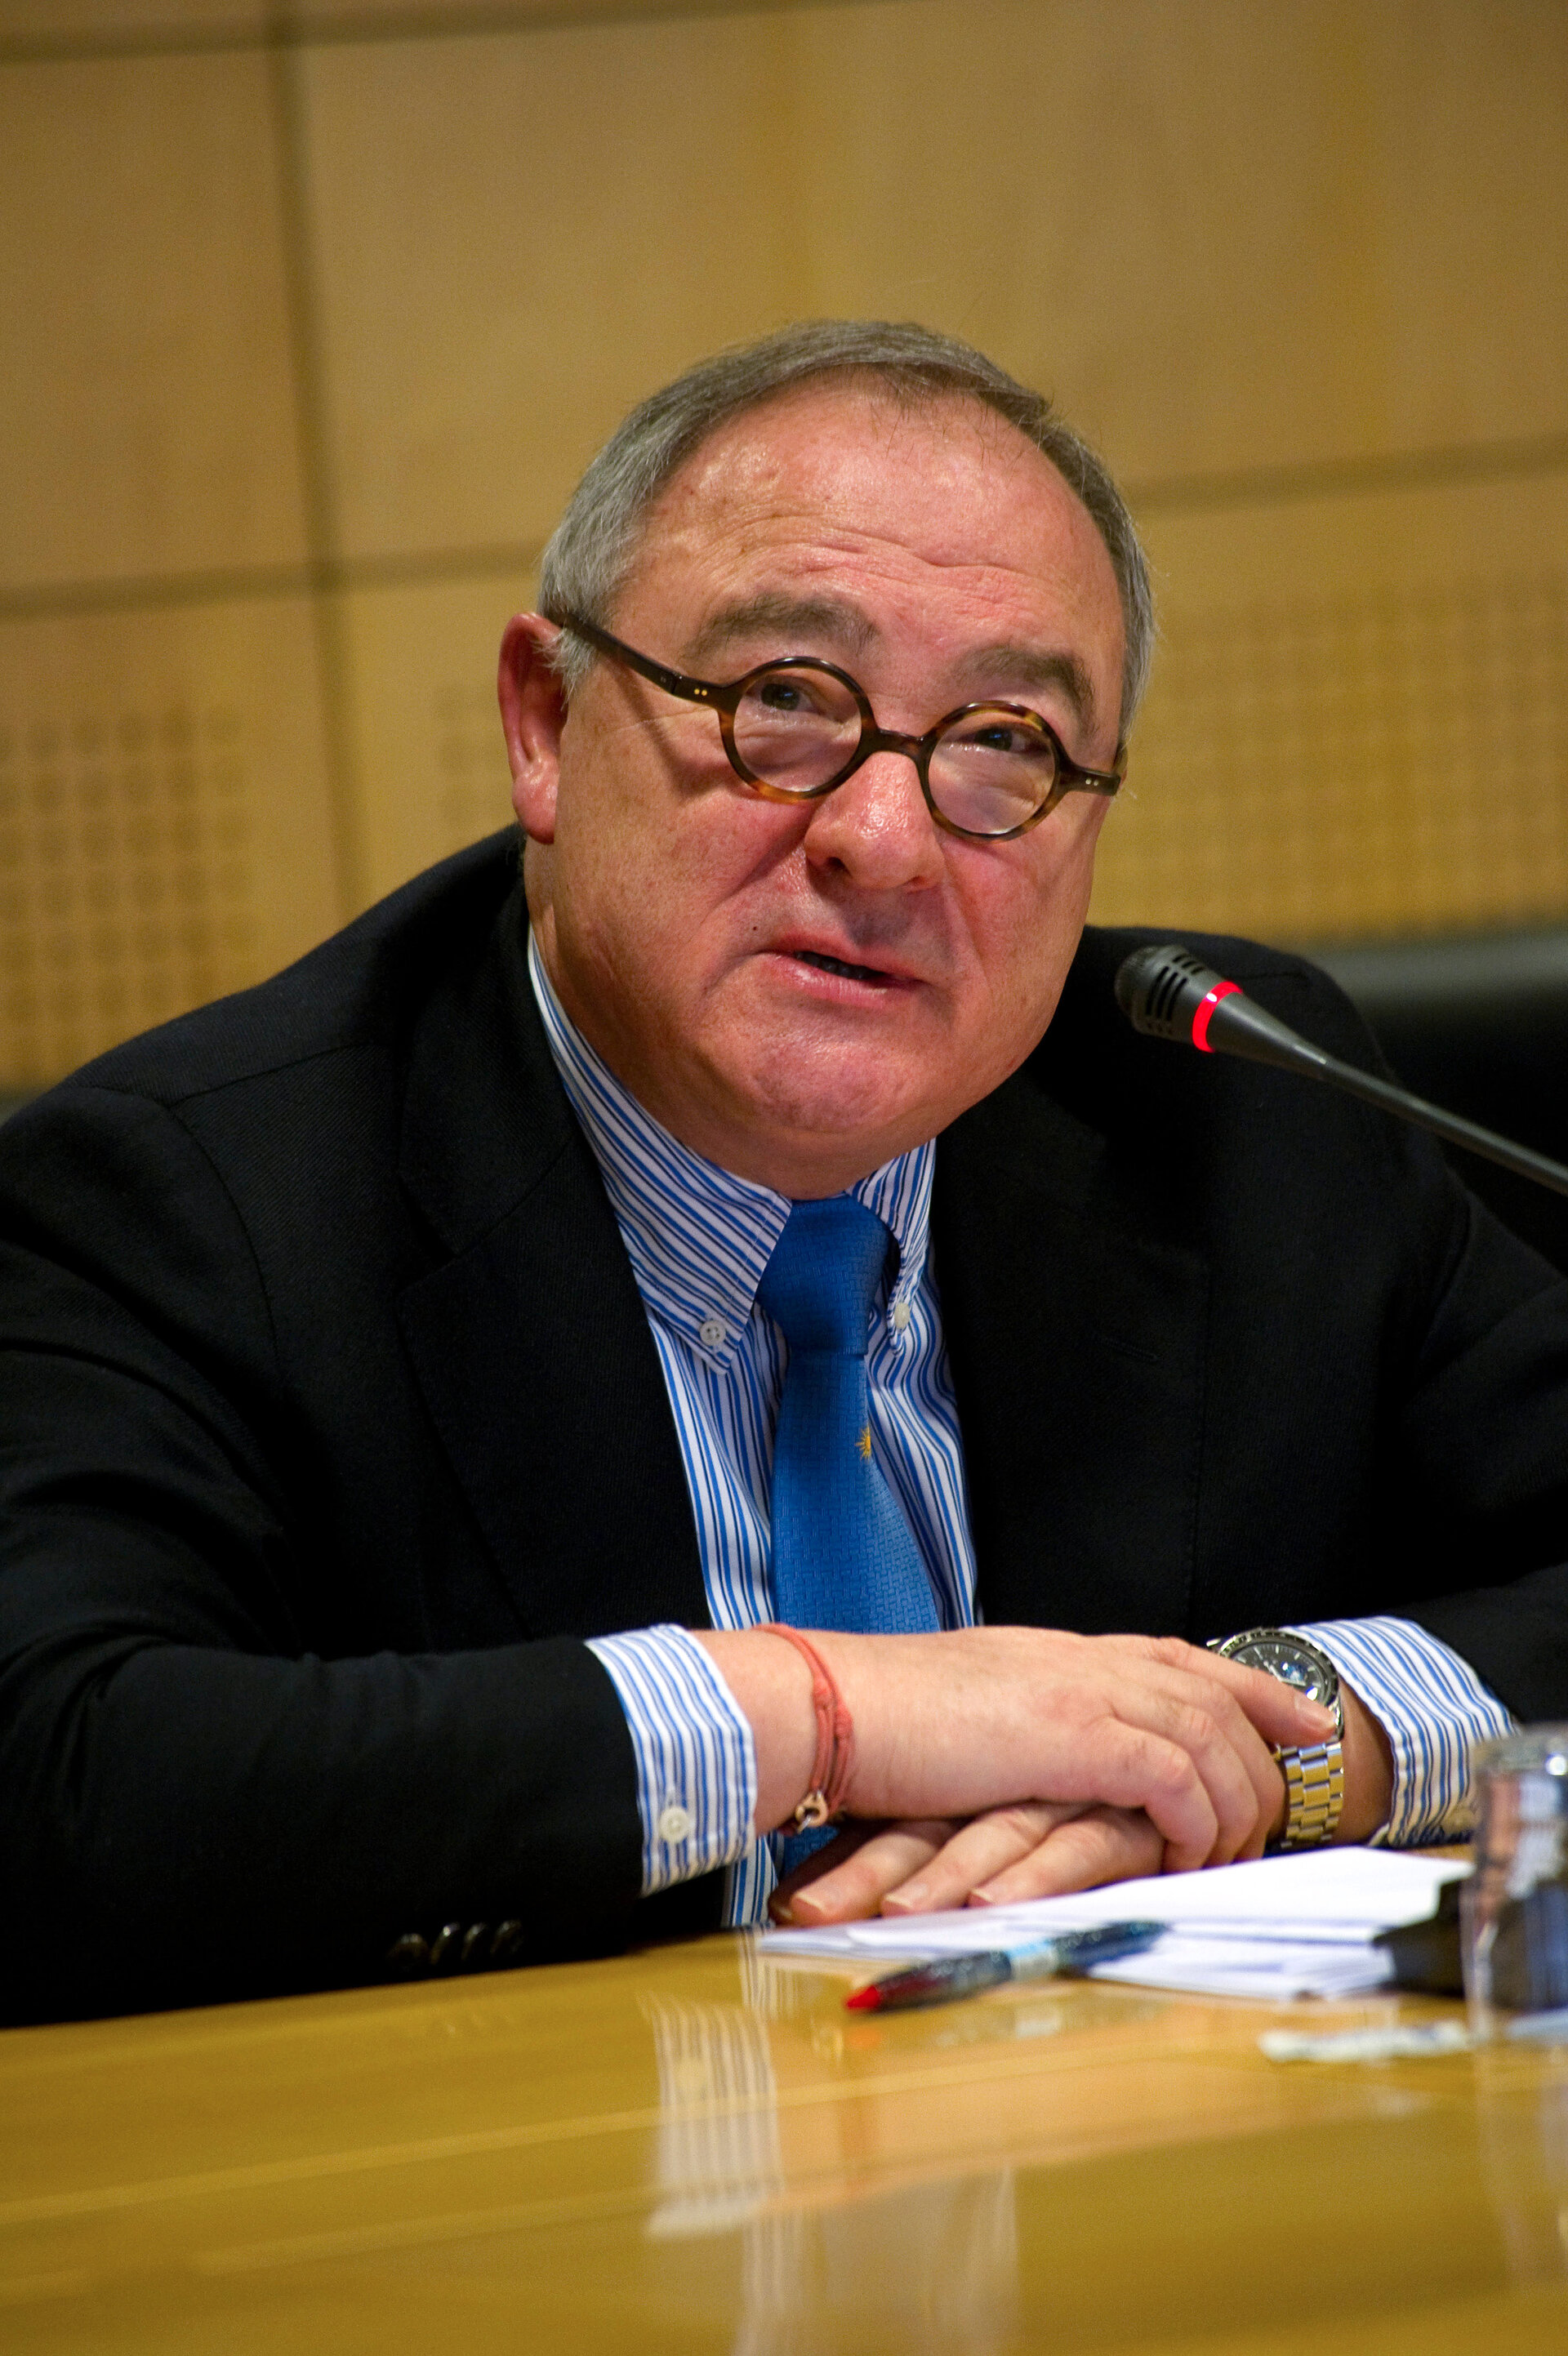 ESA's Director General